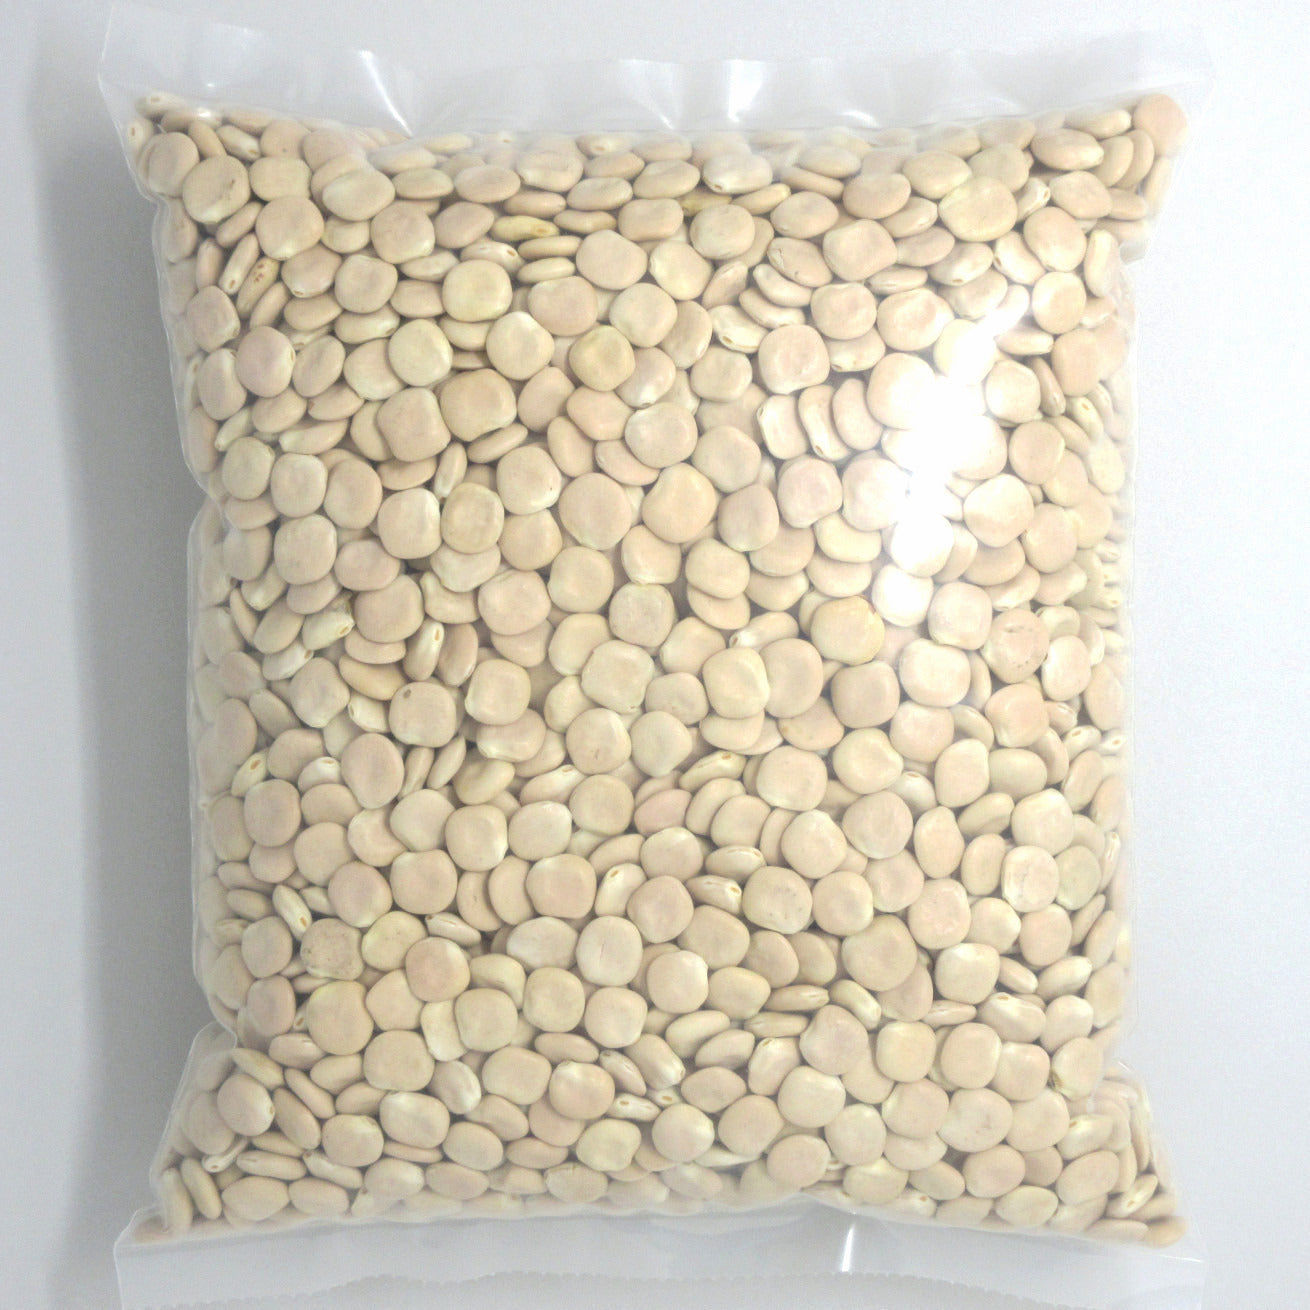 Flour Barrel product image - Lupini Beans